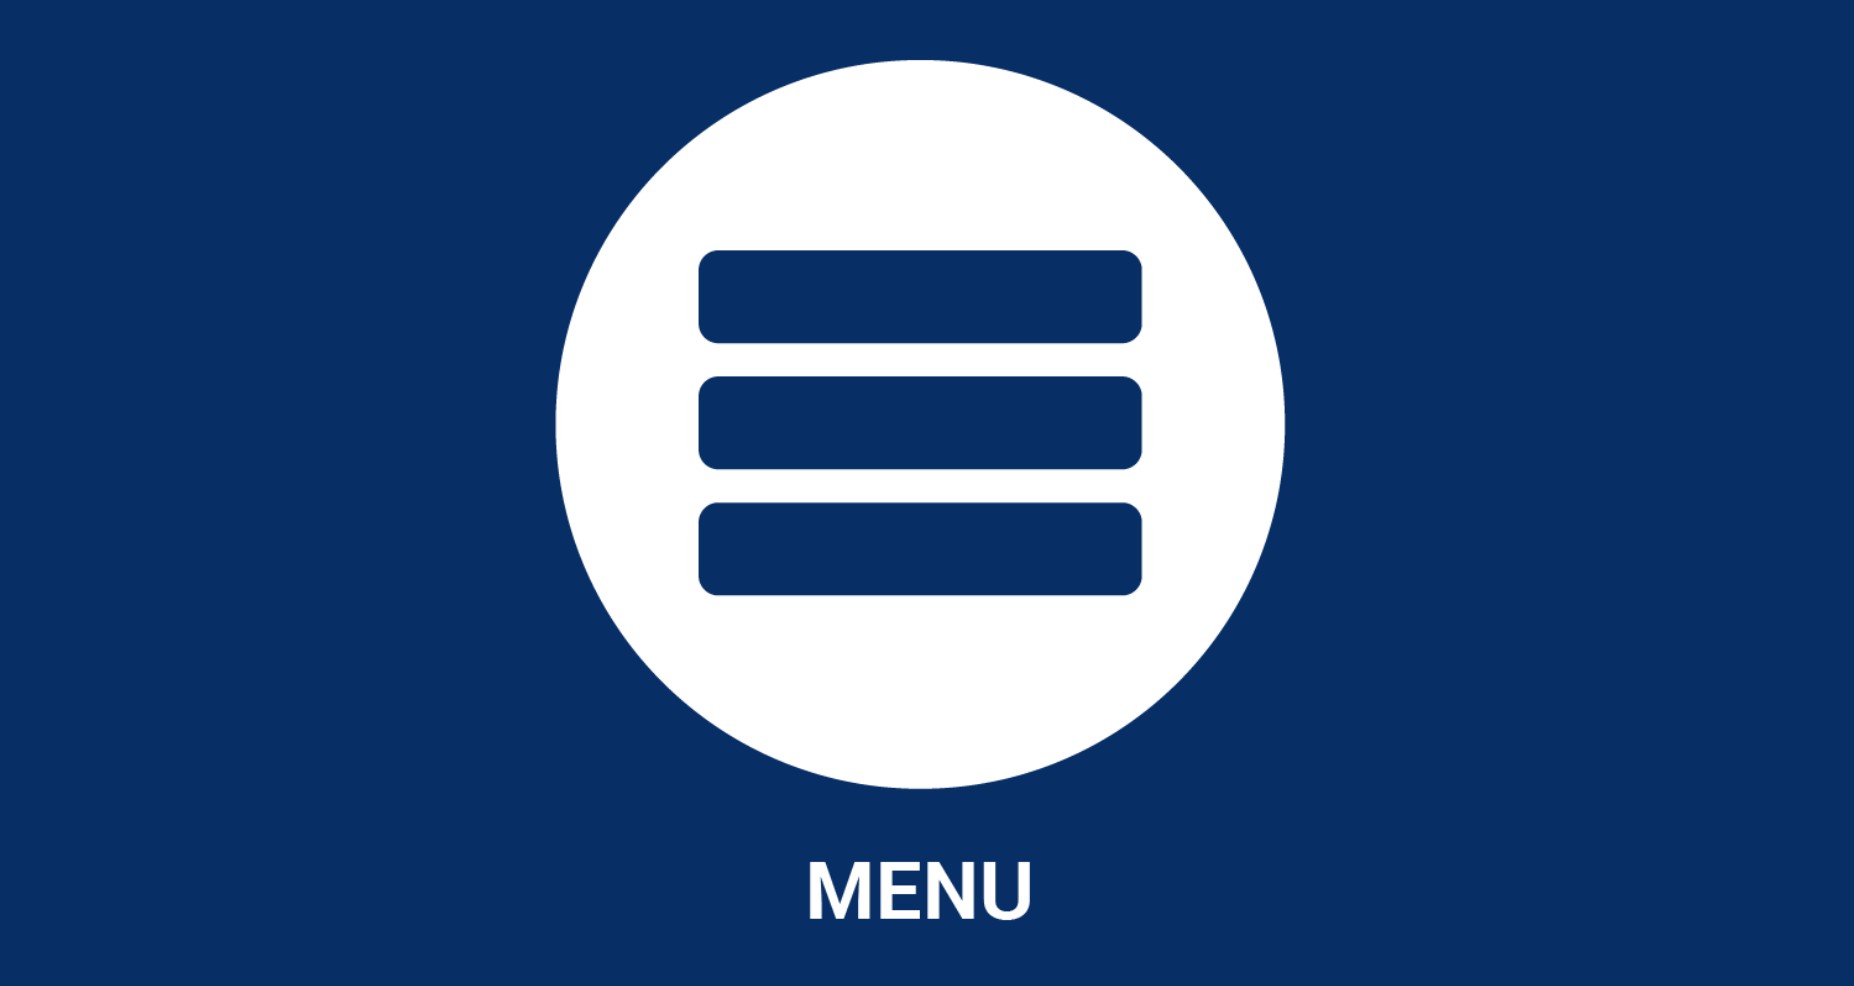 Creating Aesthetic and Functional Website Hamburger Menus